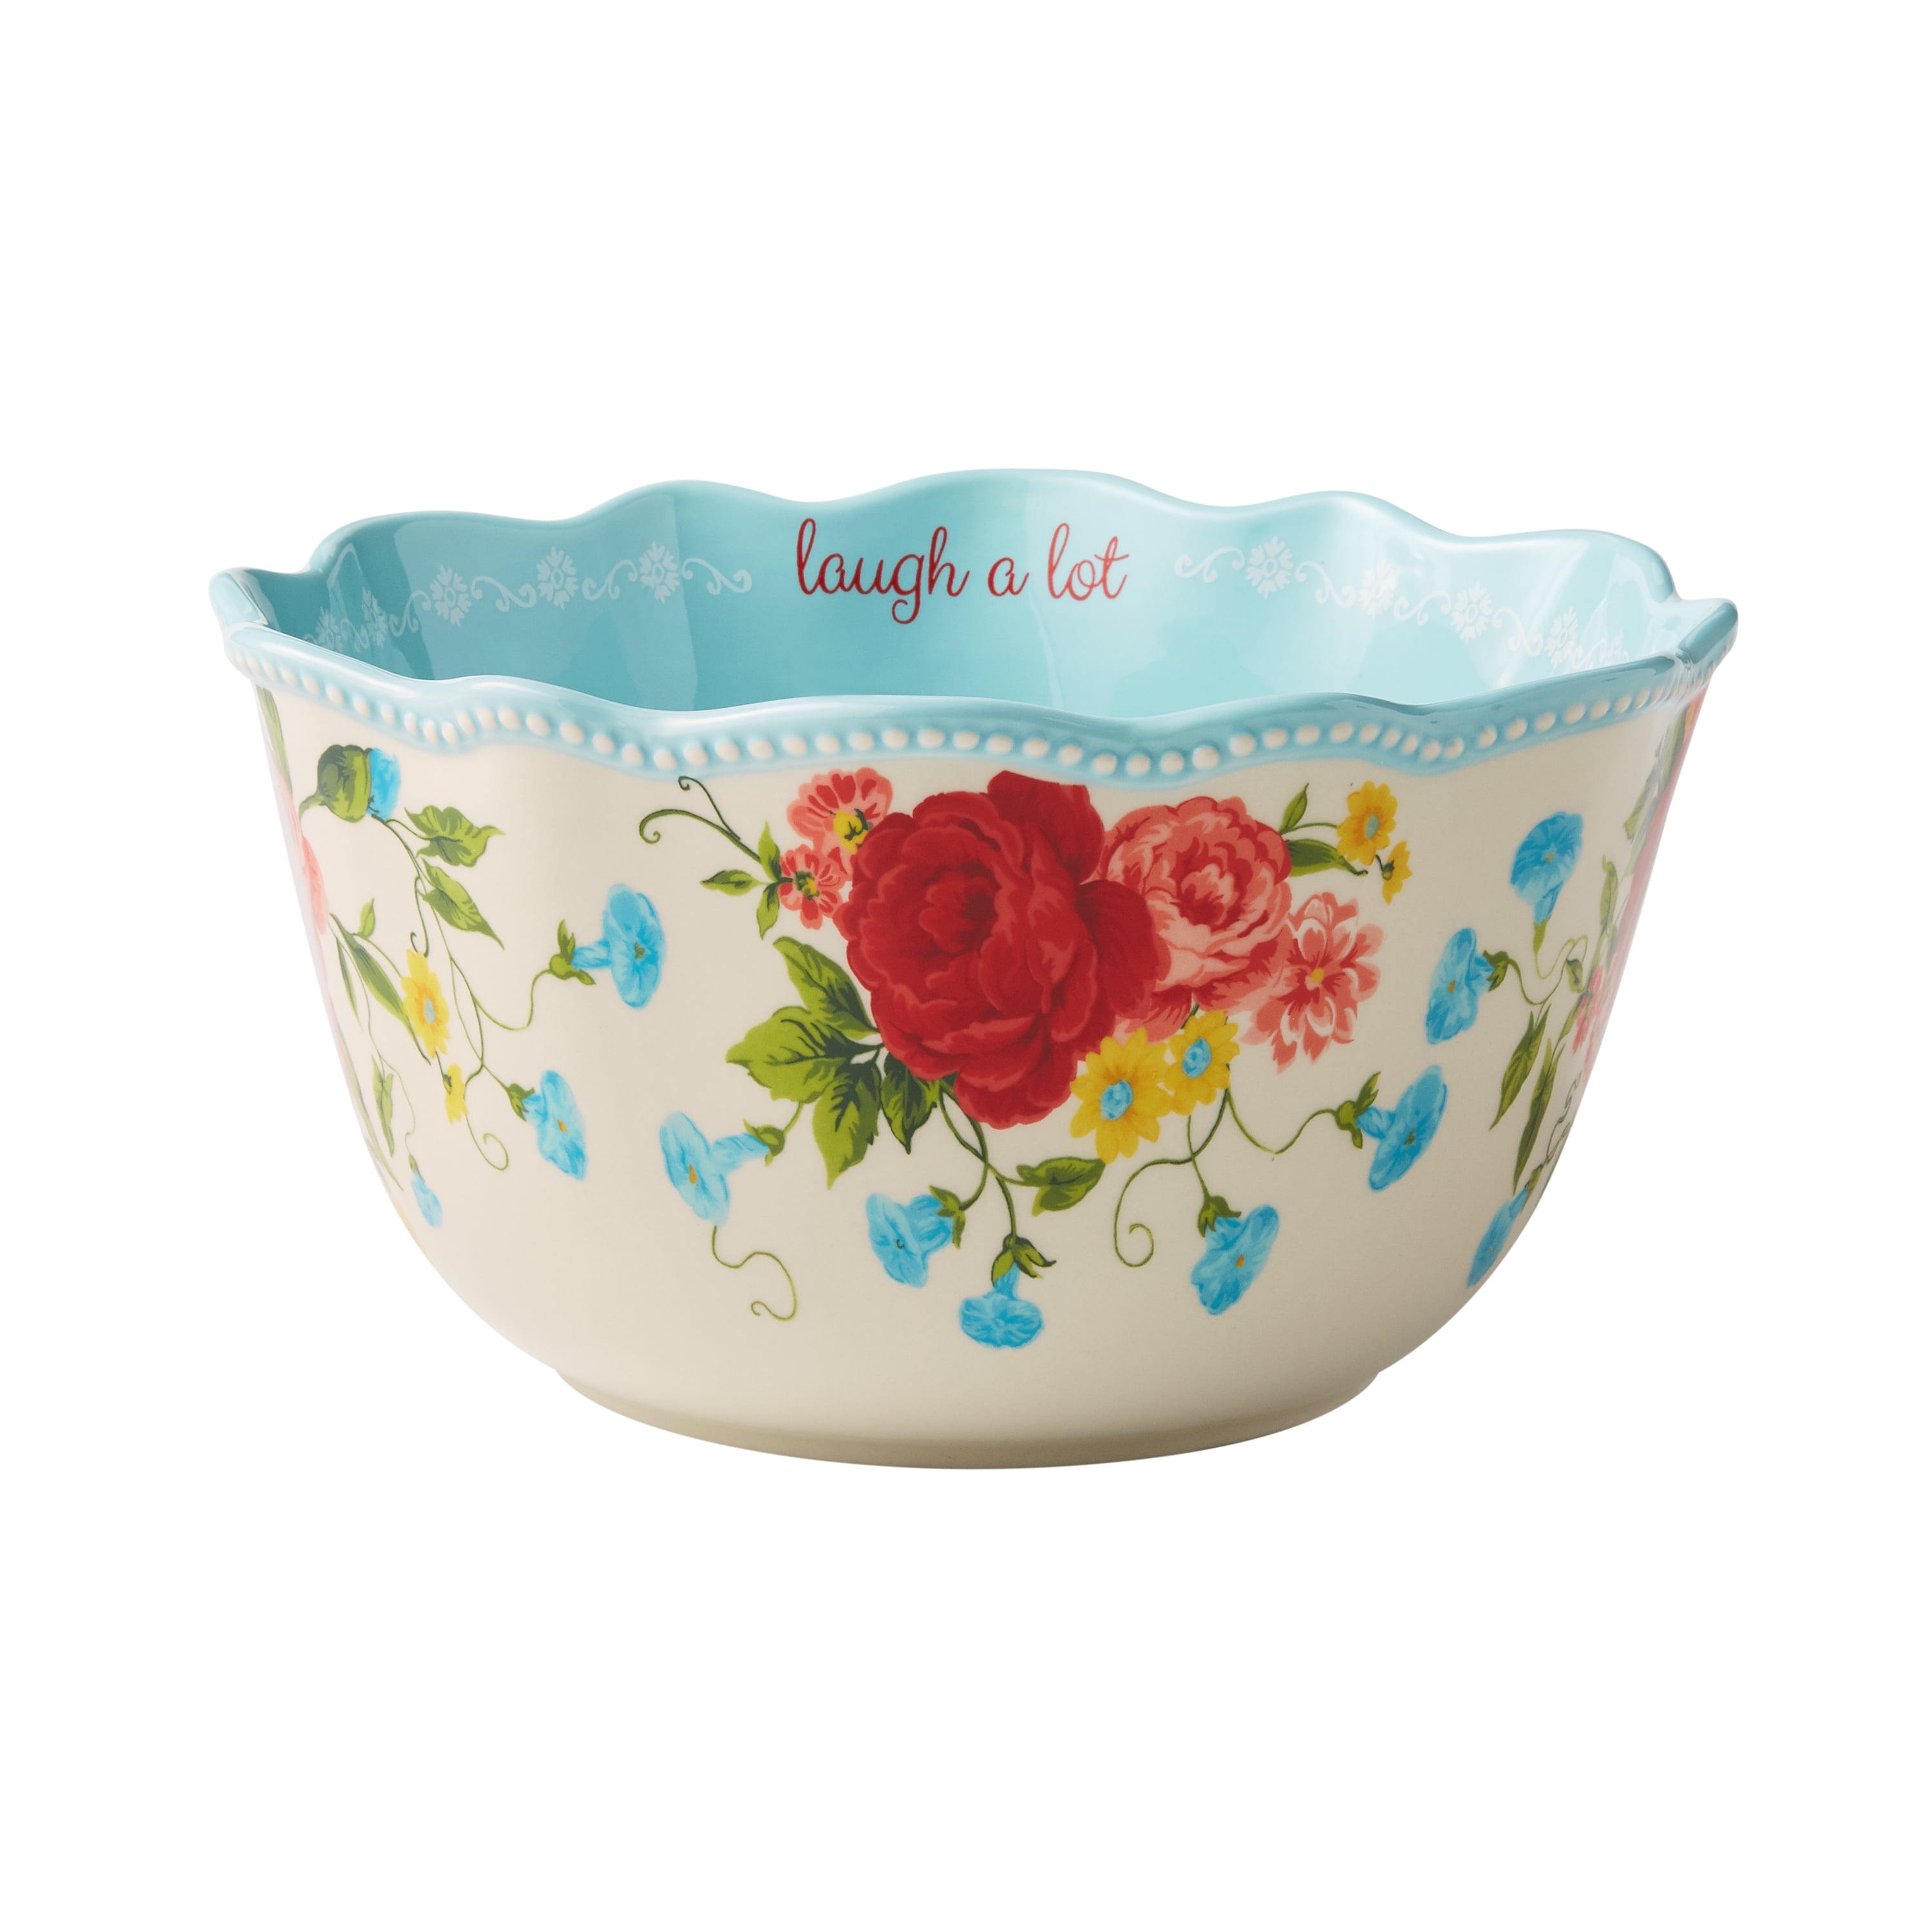 The Pioneer Woman Vintage Floral 3-Piece Serving Bowl Set - Zars Buy